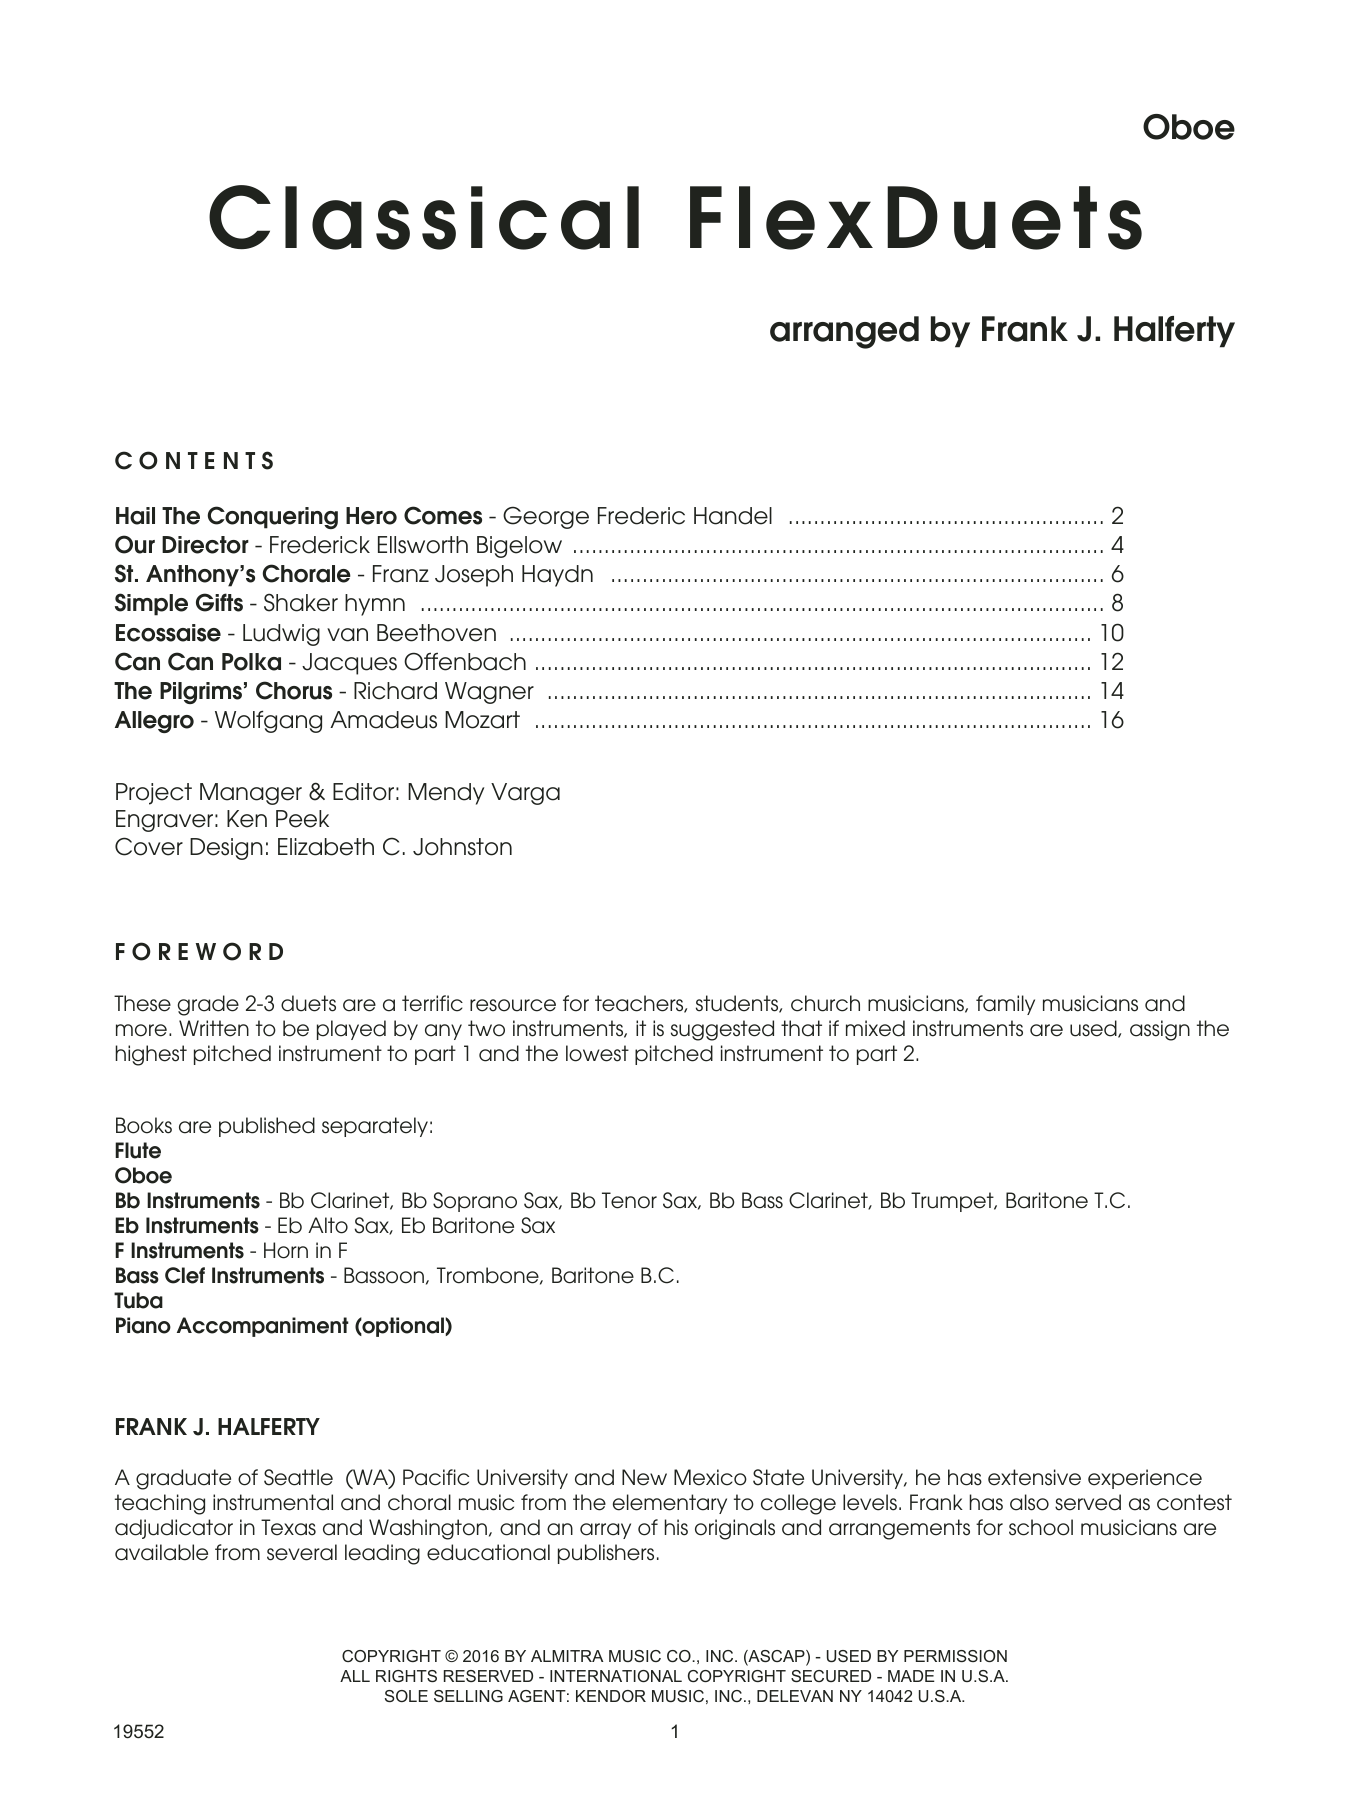 Download Frank J. Halferty Classical FlexDuets - Oboe Sheet Music